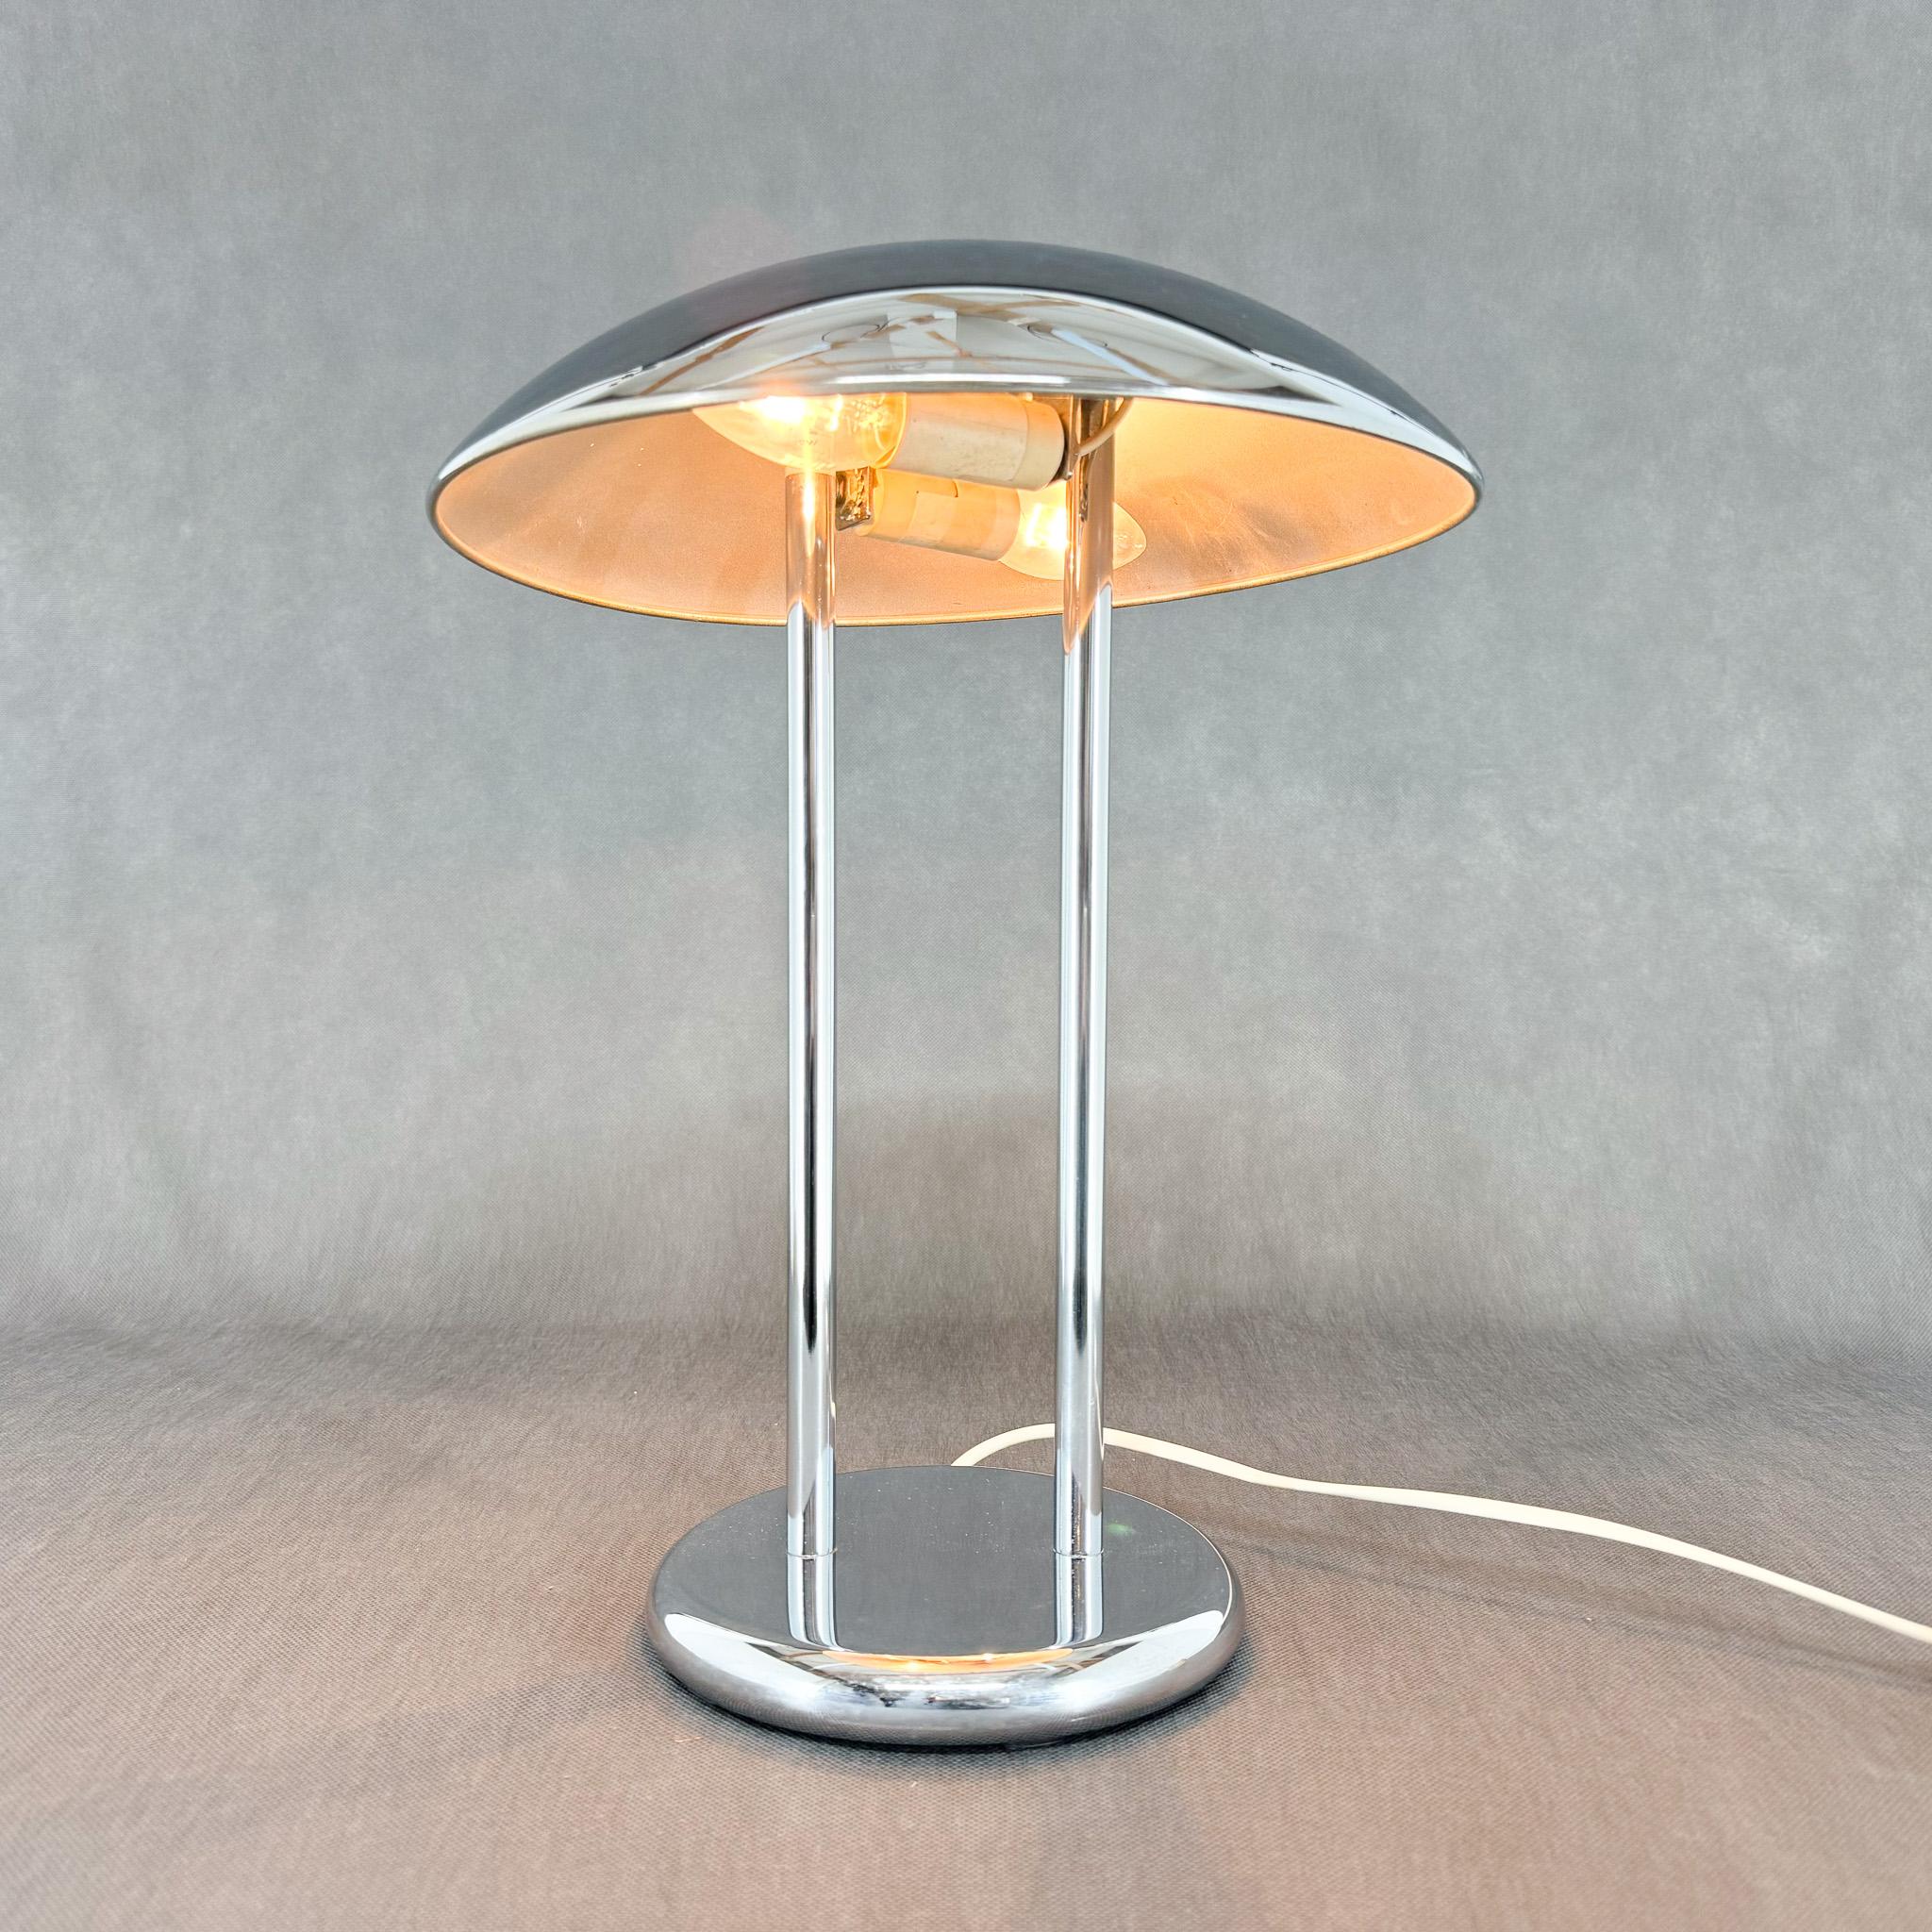 Robert Sonneman's Chrome Mushroom Lamp for Ikea, 1980s In Good Condition For Sale In Praha, CZ